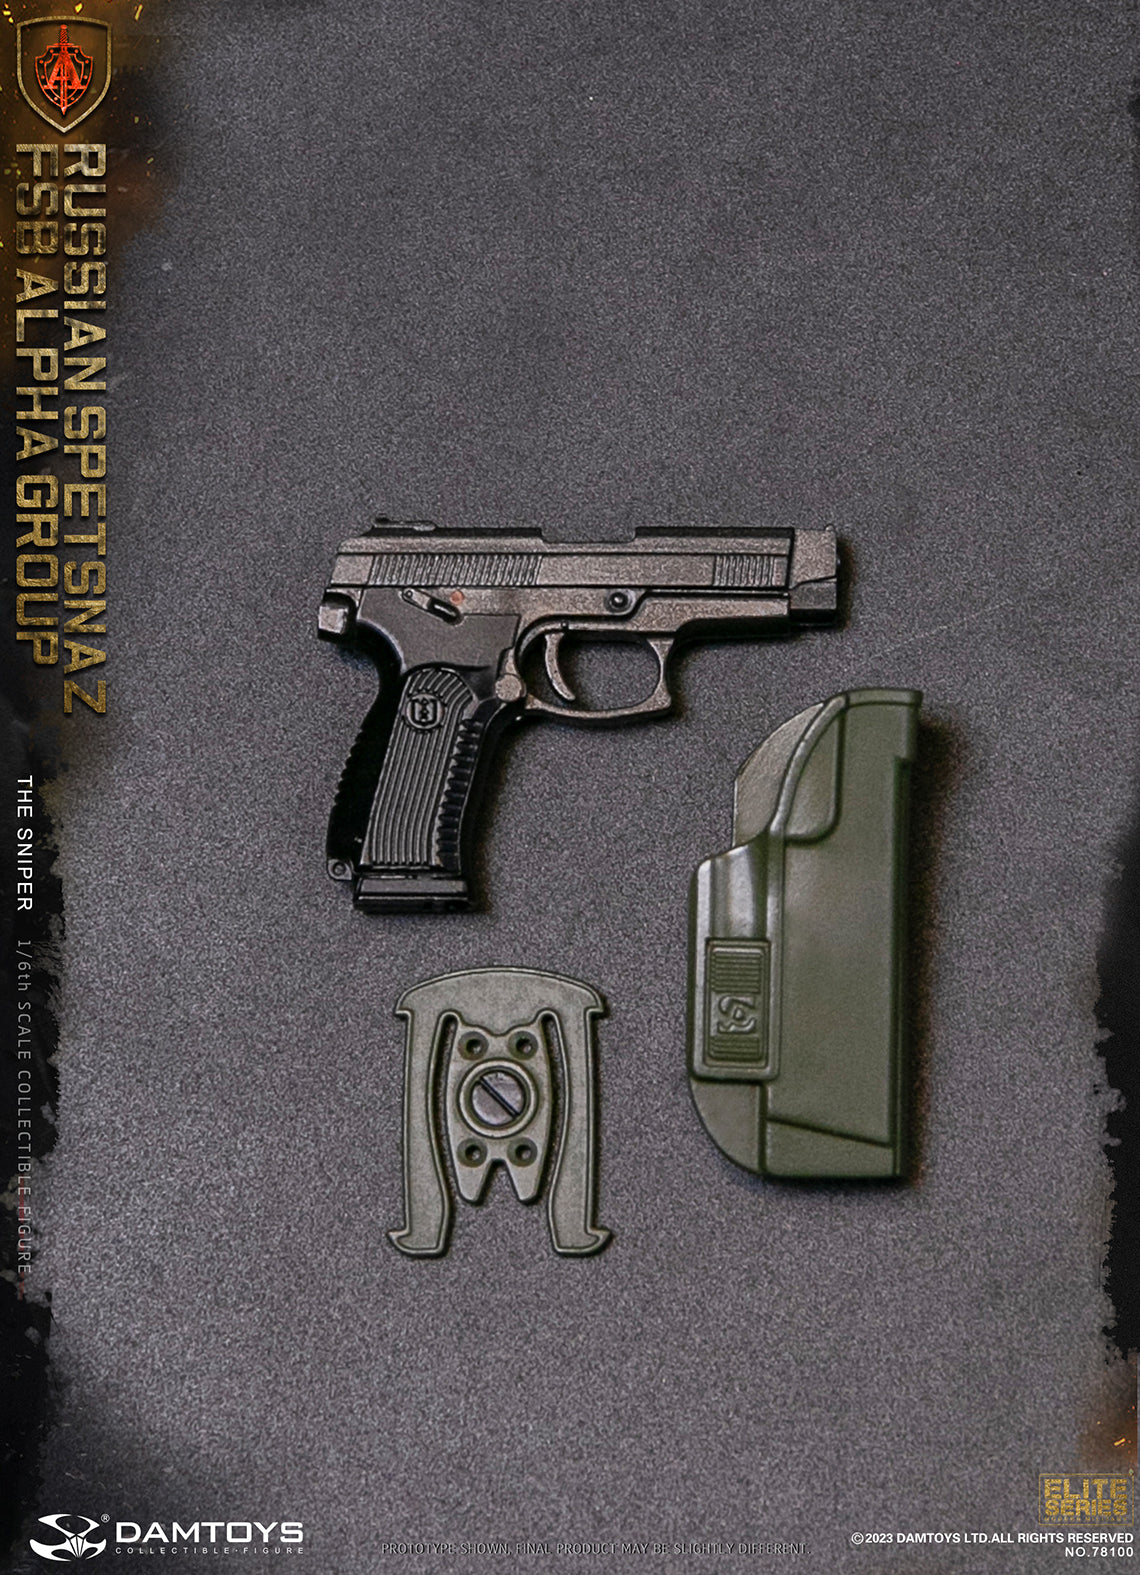 Damtoys - 78100 - Elite Series - Russian SPETSNAZ FSB - Alpha Group Sniper (1/6 Scale) - Marvelous Toys